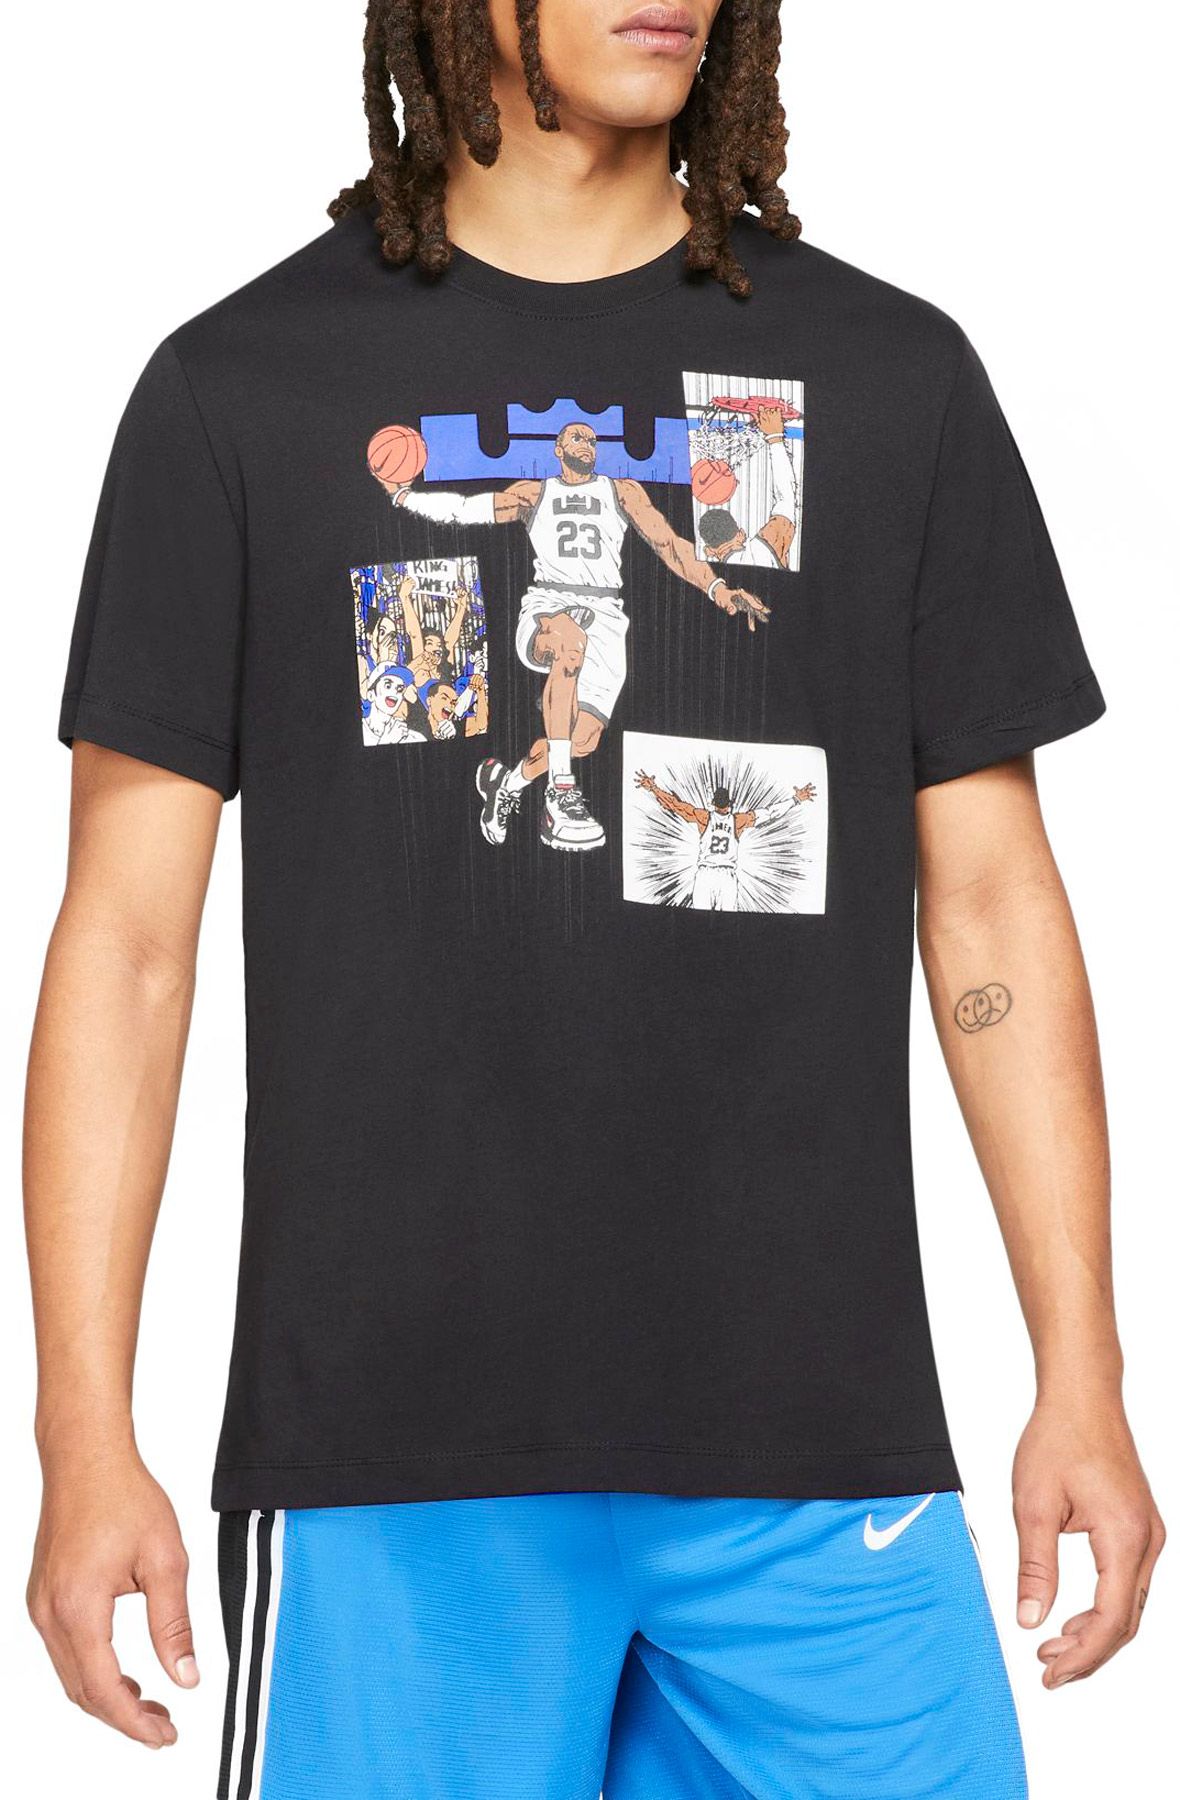 Nike Men's LeBron Logo Basketball T-Shirt, Medium, Black